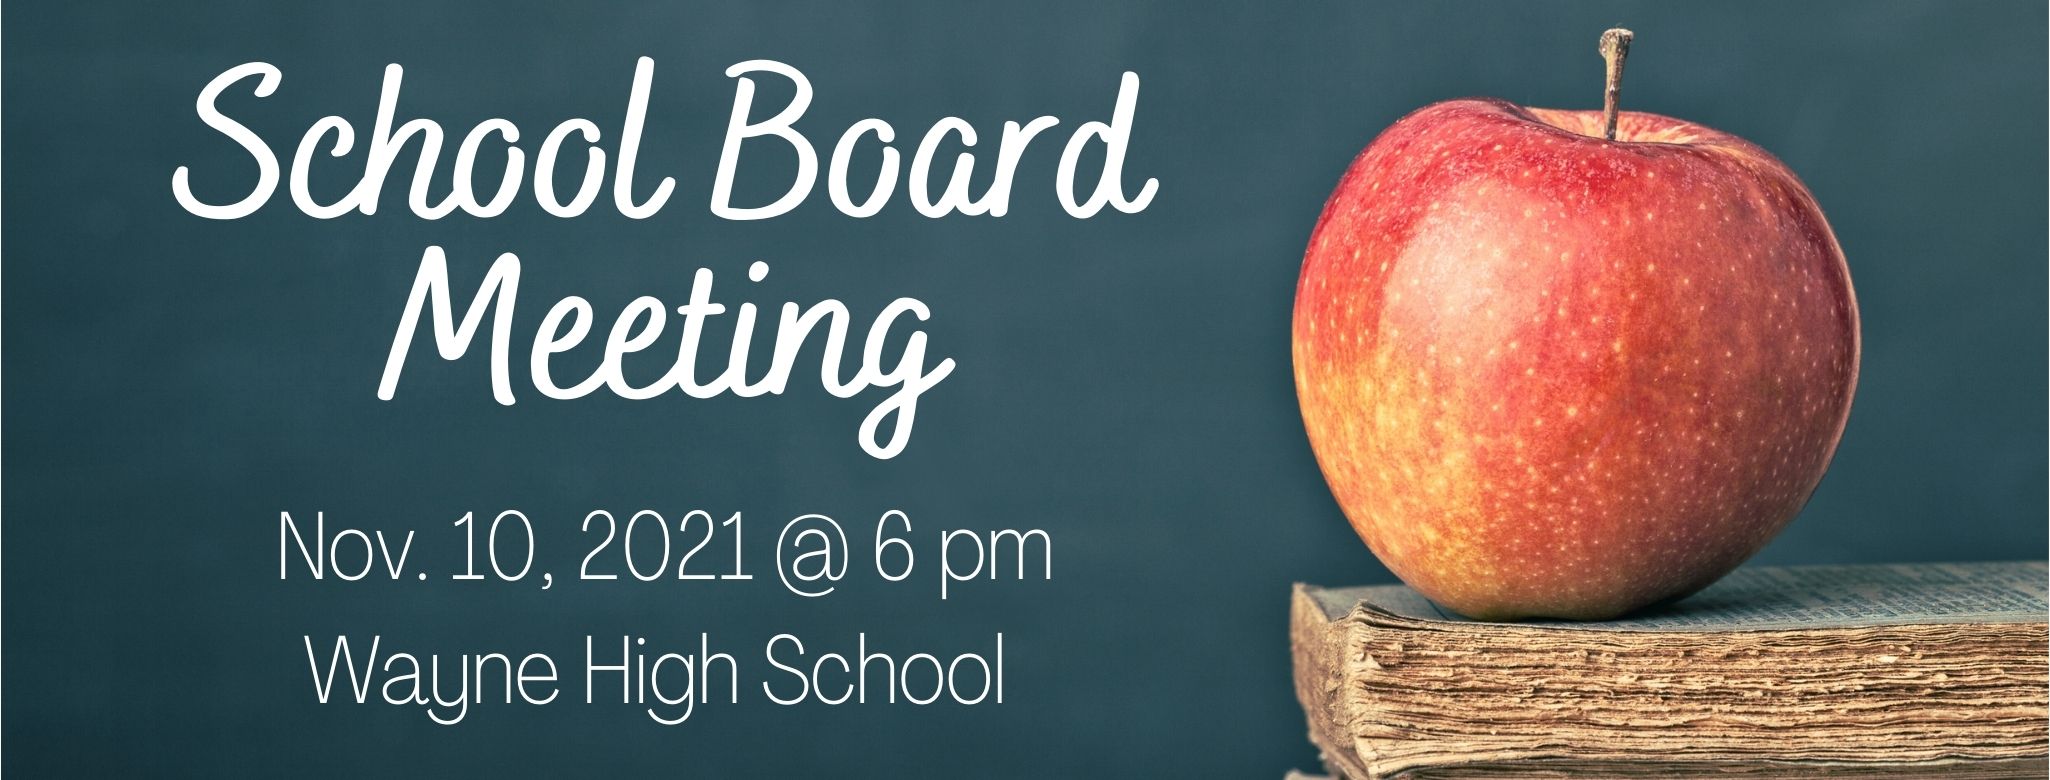 School Board Meeting 12